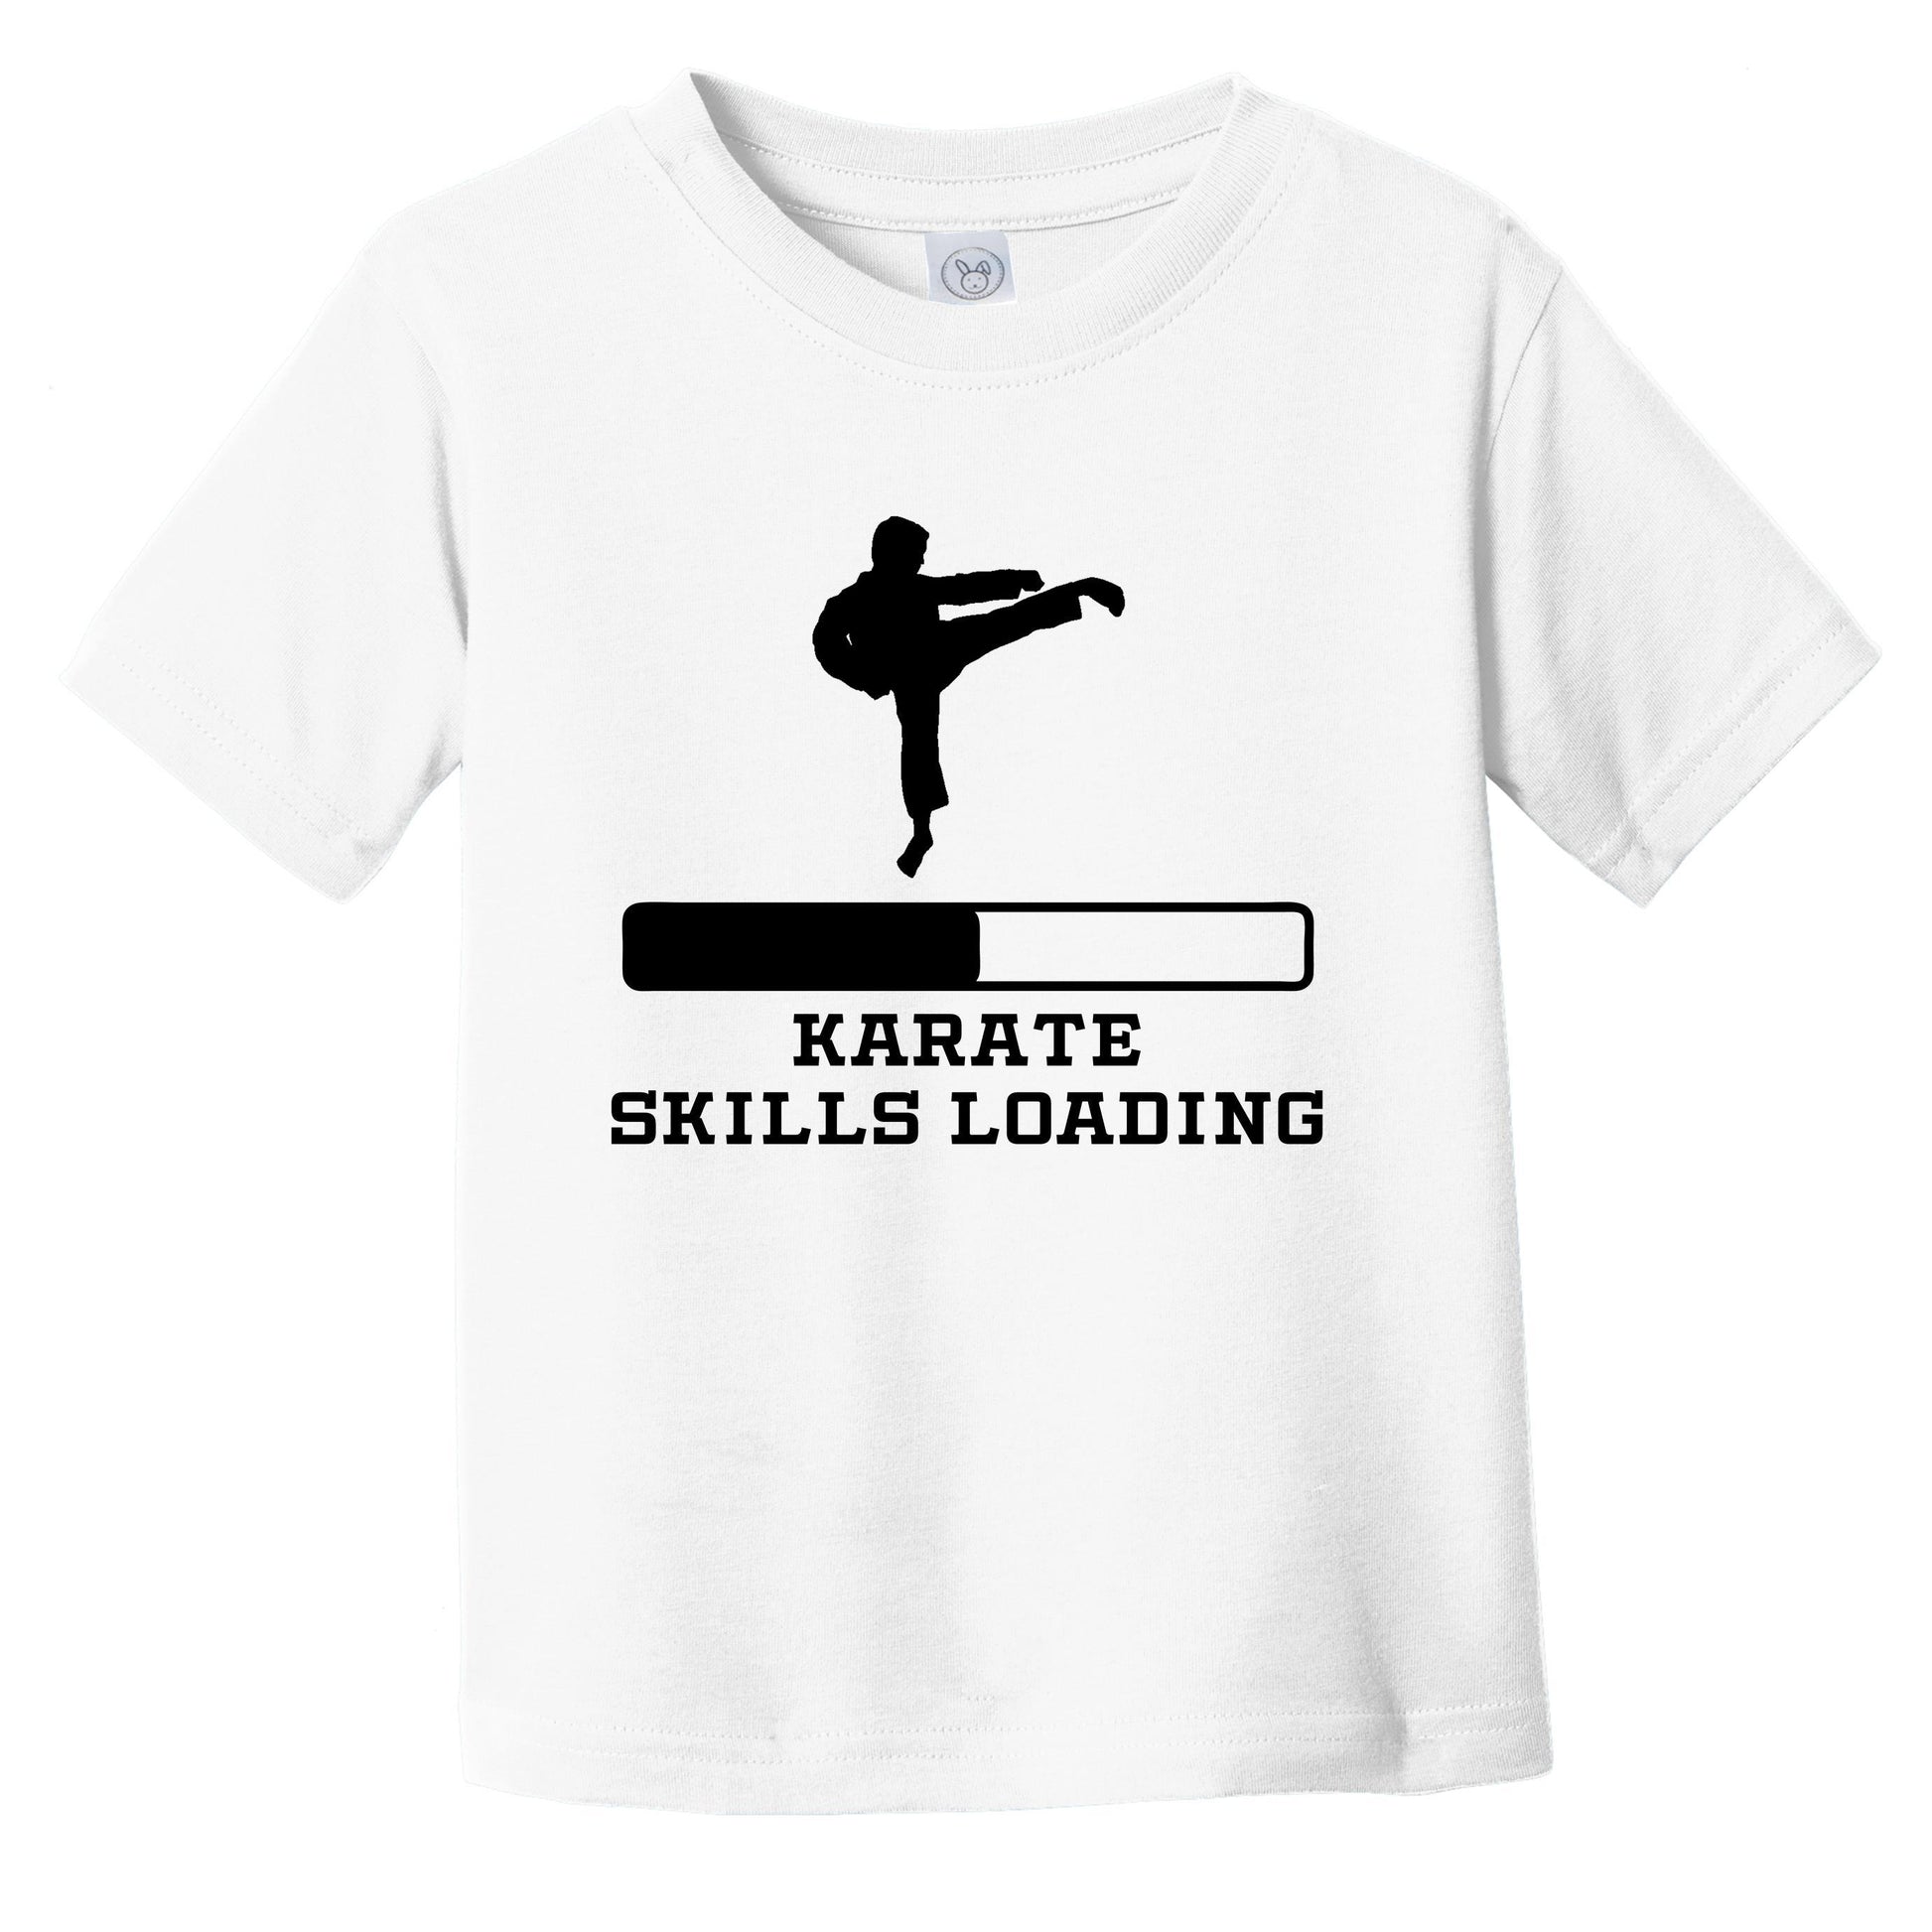 Karate Skills Loading Funny Martial Arts Humor Infant Toddler T-Shirt